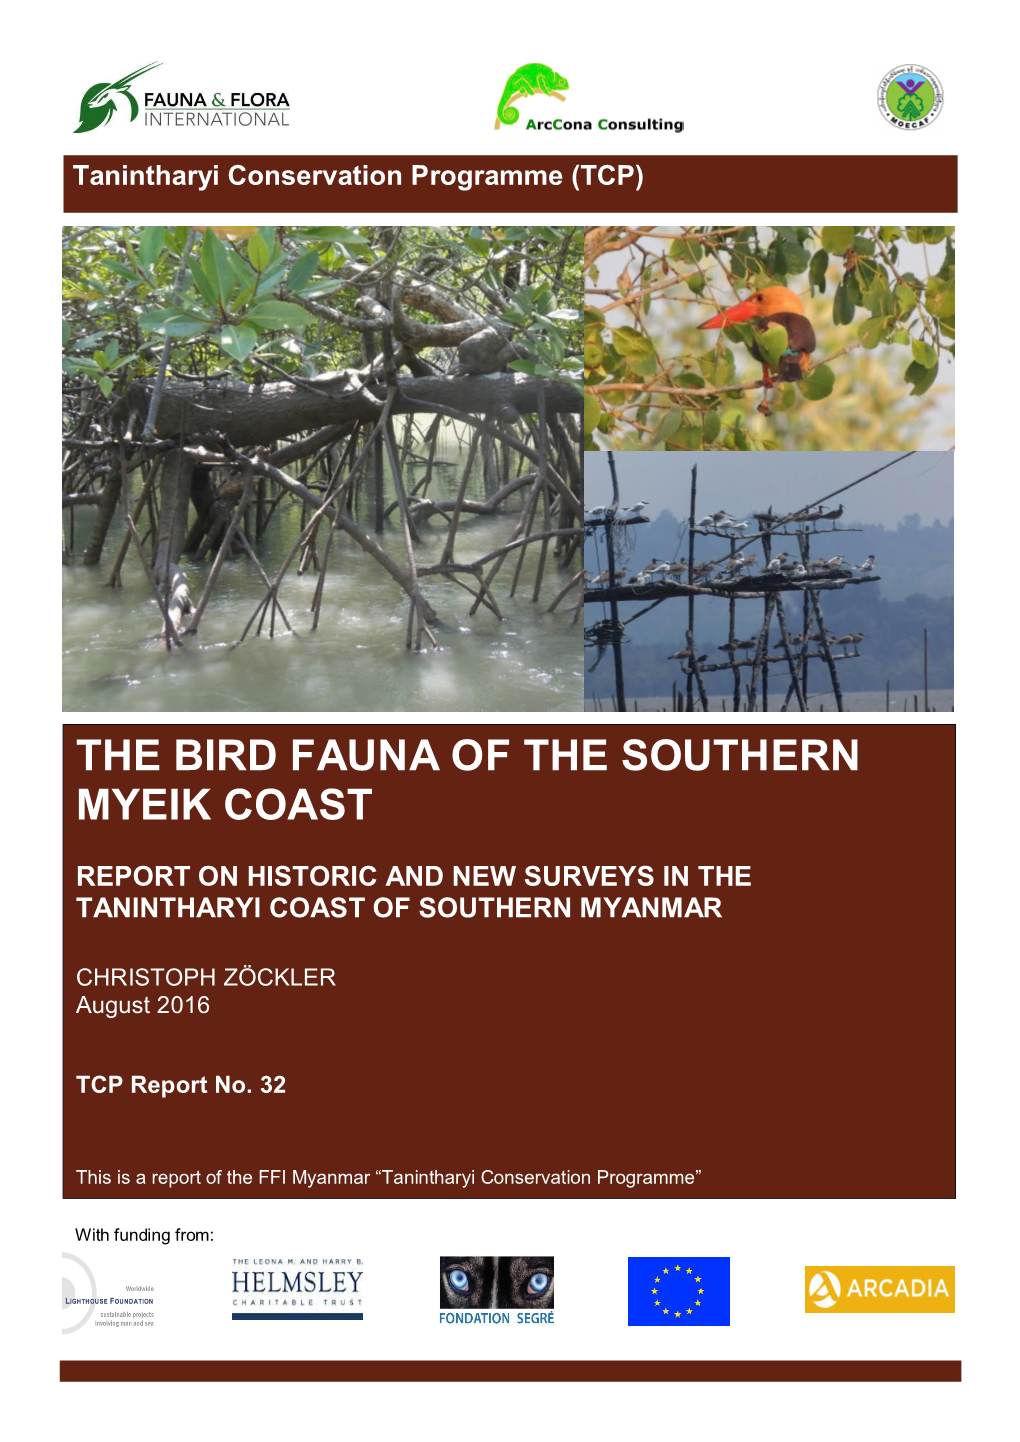 The Bird Fauna of the Southern Myeik Coast, Report on Historic